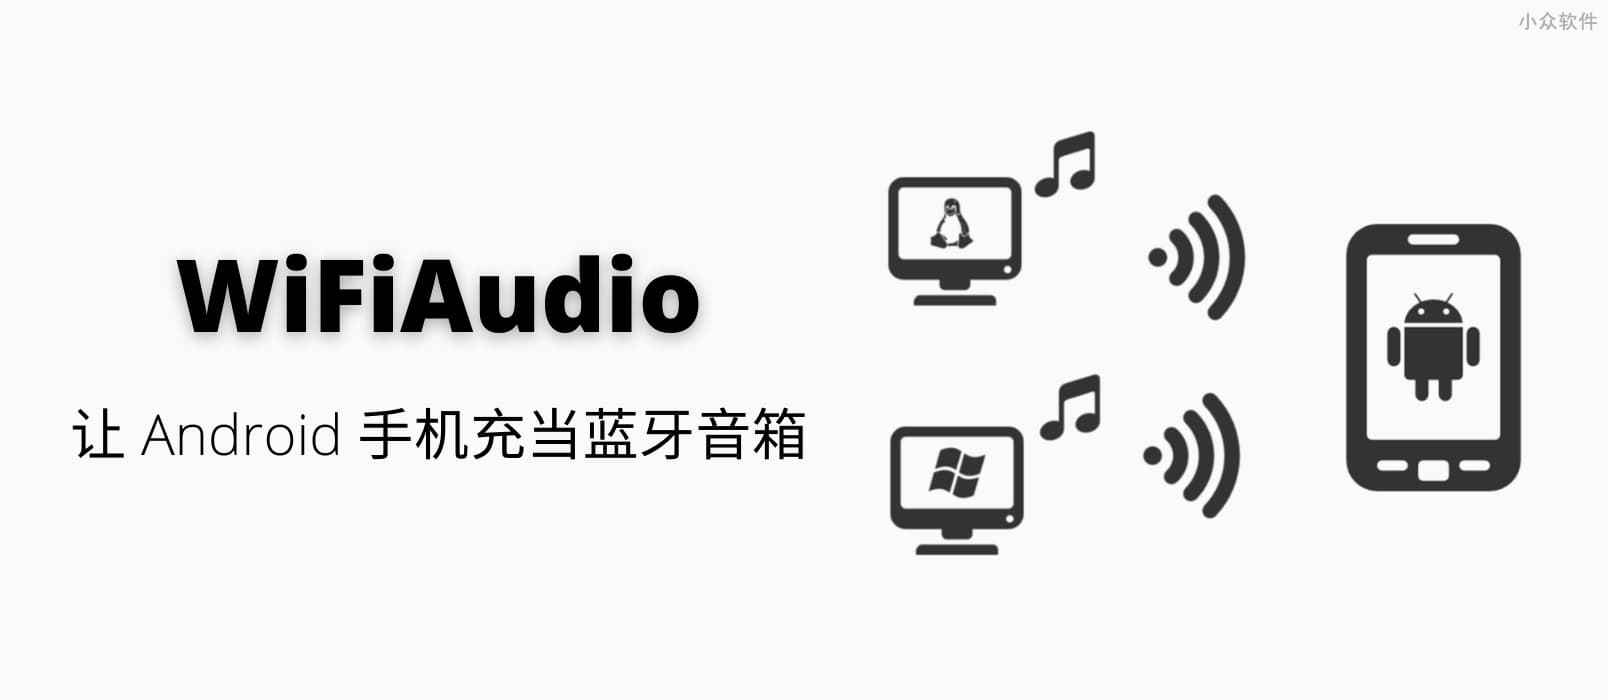 WiFiAudio - 让 Android 手机充当无线音箱，通过 Windows/Linux 播放音乐